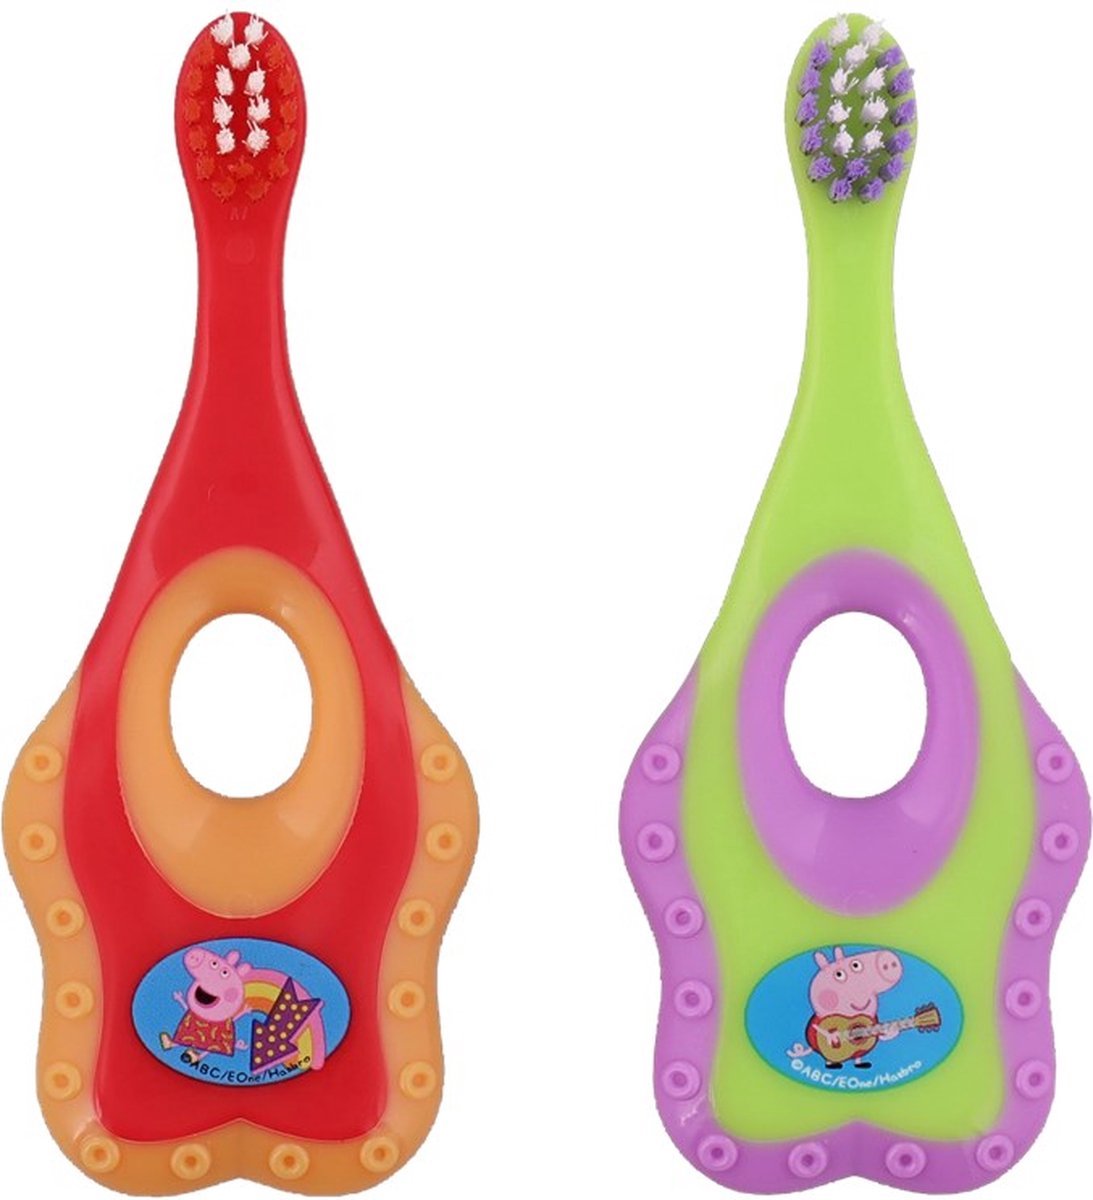 Peppa pig tandenborstel - Tandenborstel set 2 - Peppa pig speelgoed - Peppa pig baby - Tandenborstel baby - Baby bijtring - Tandjes - Toothbrush extra soft - 0+ jaar